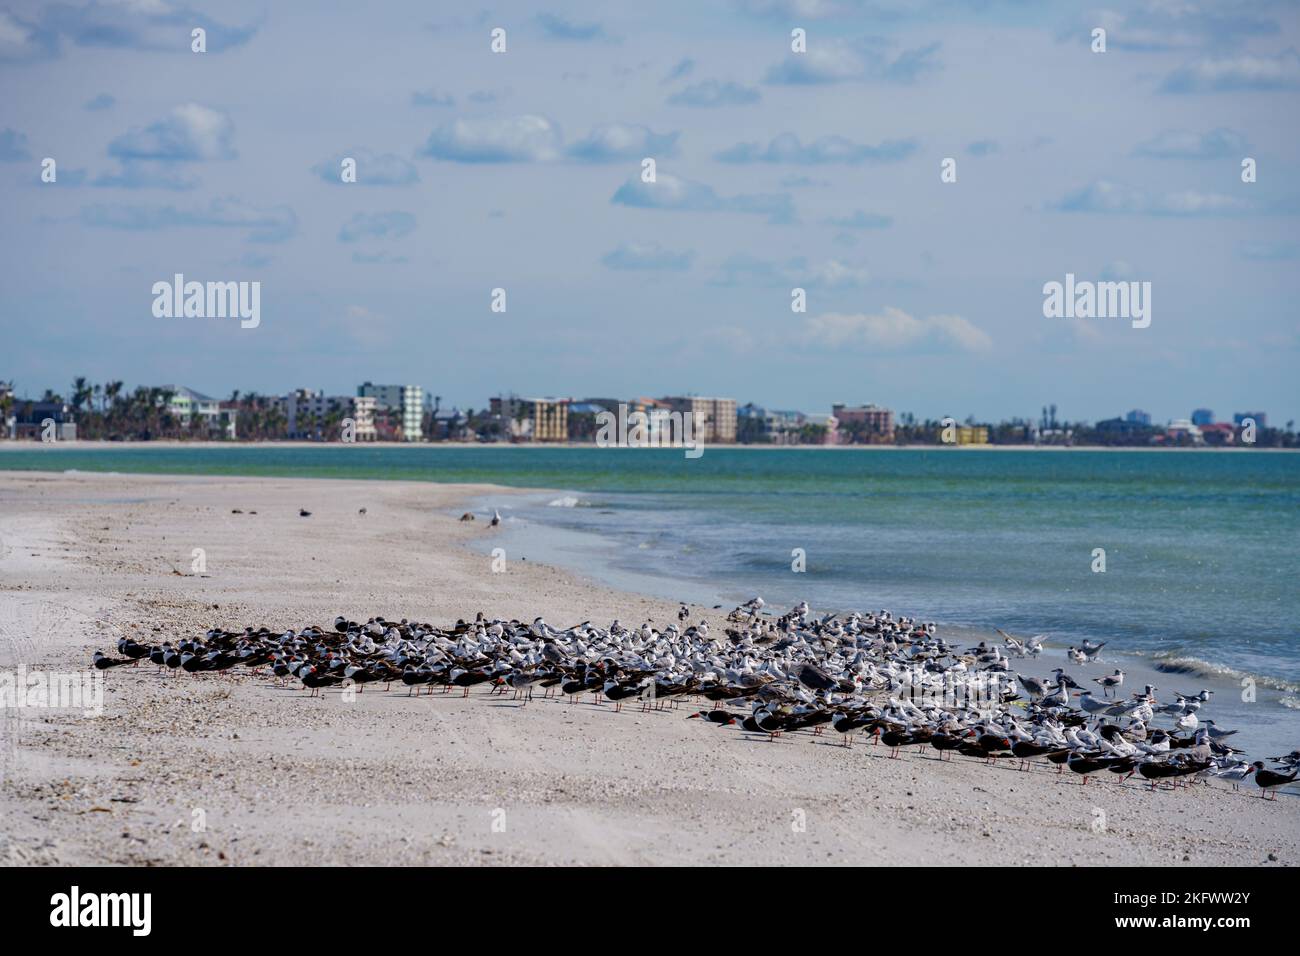 Flock of seagulls on Fort Myers Beach Florida USA Stock Photo